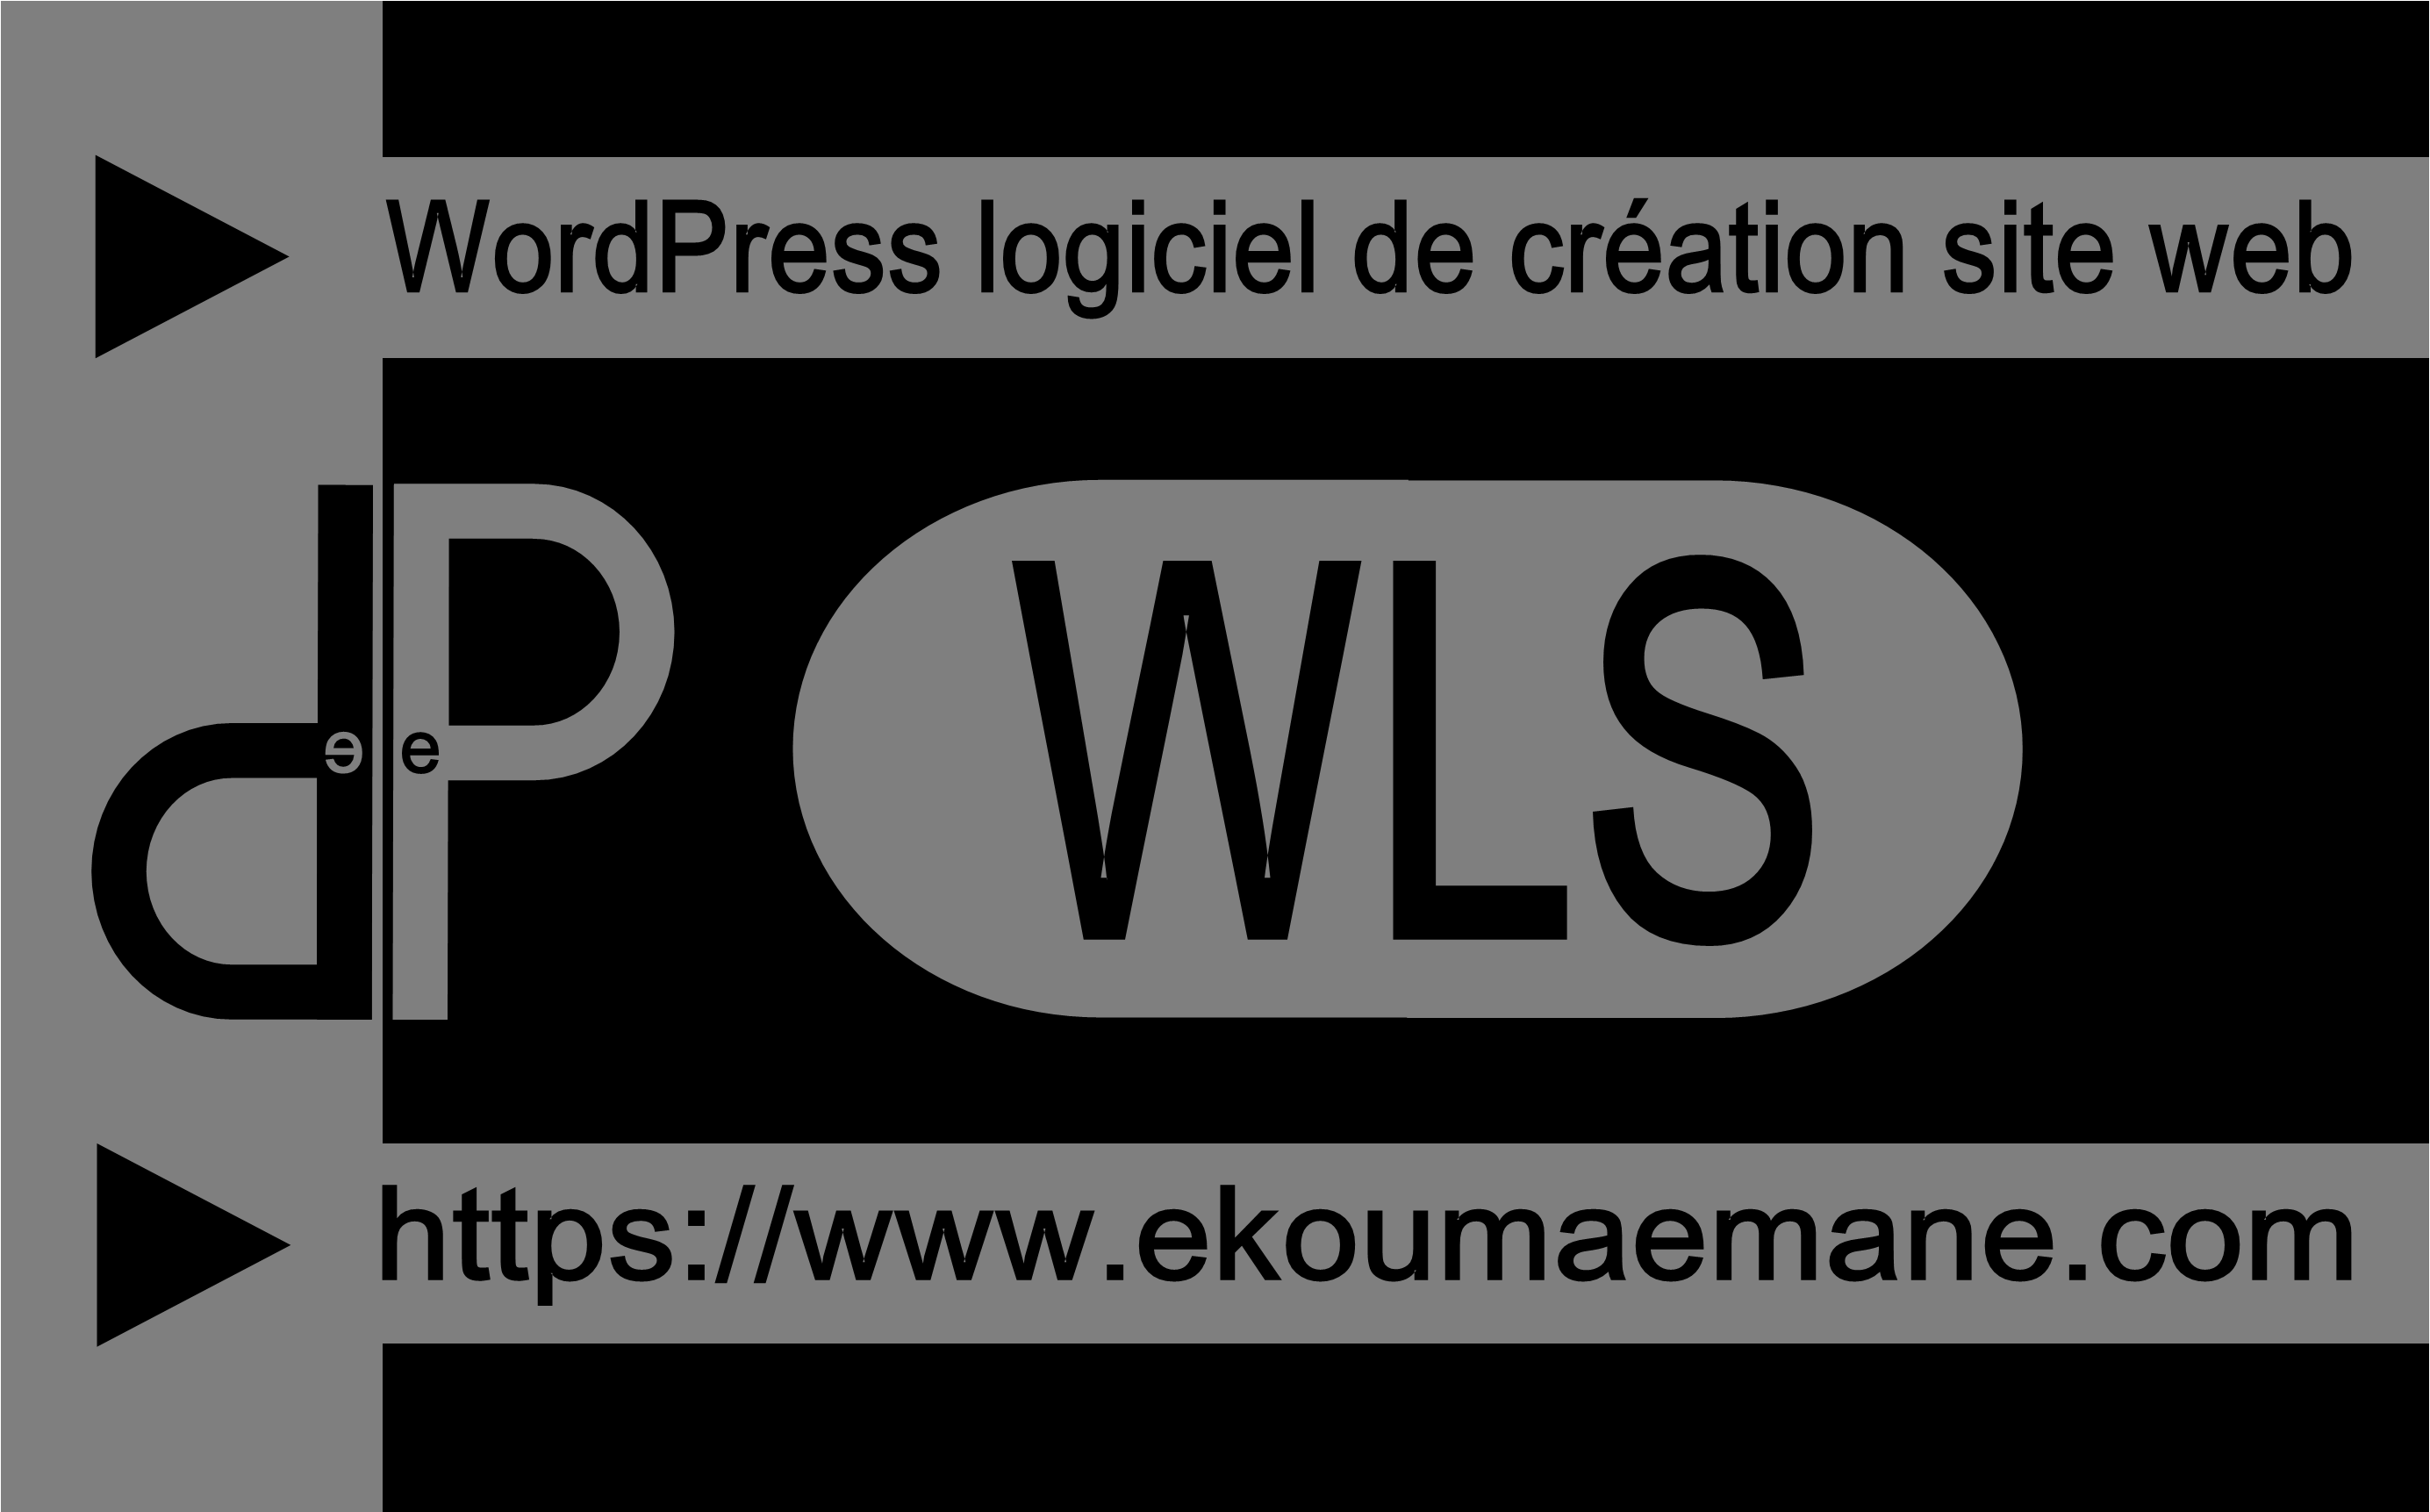 WordPress App Web | CMS (Content Management System)